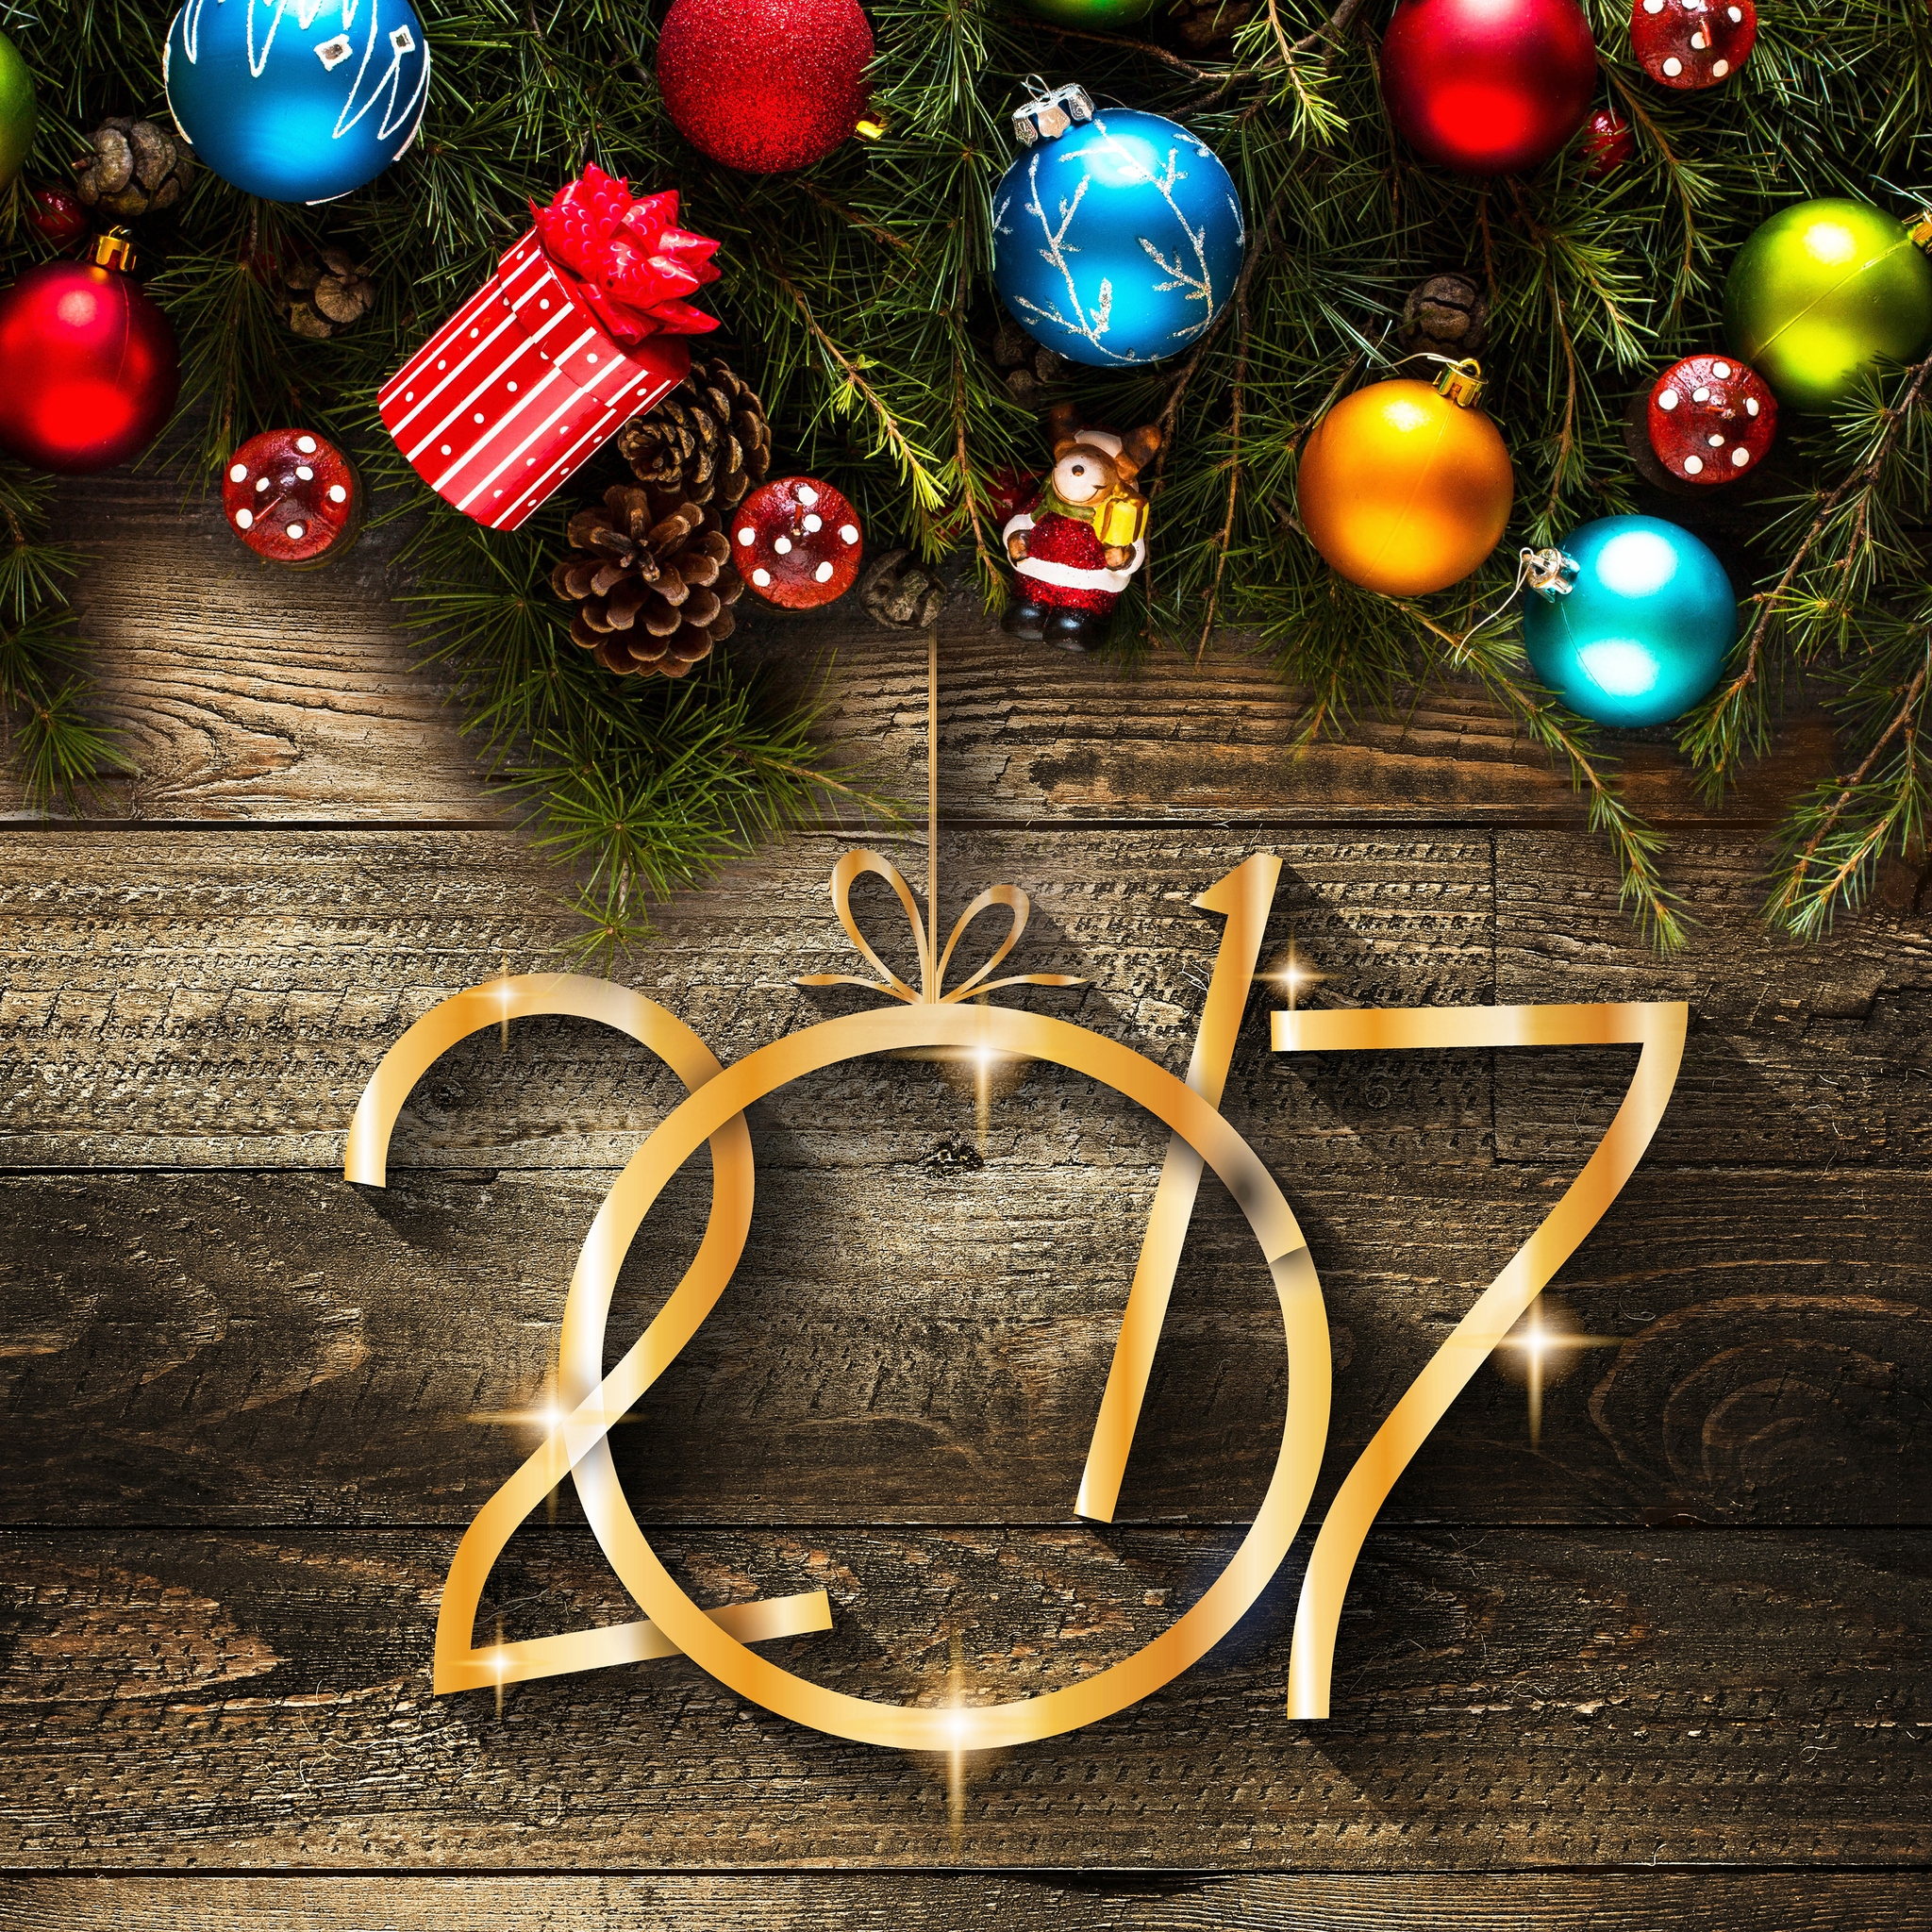 Holiday Season Decorations for 2048 x 2048 New iPad resolution